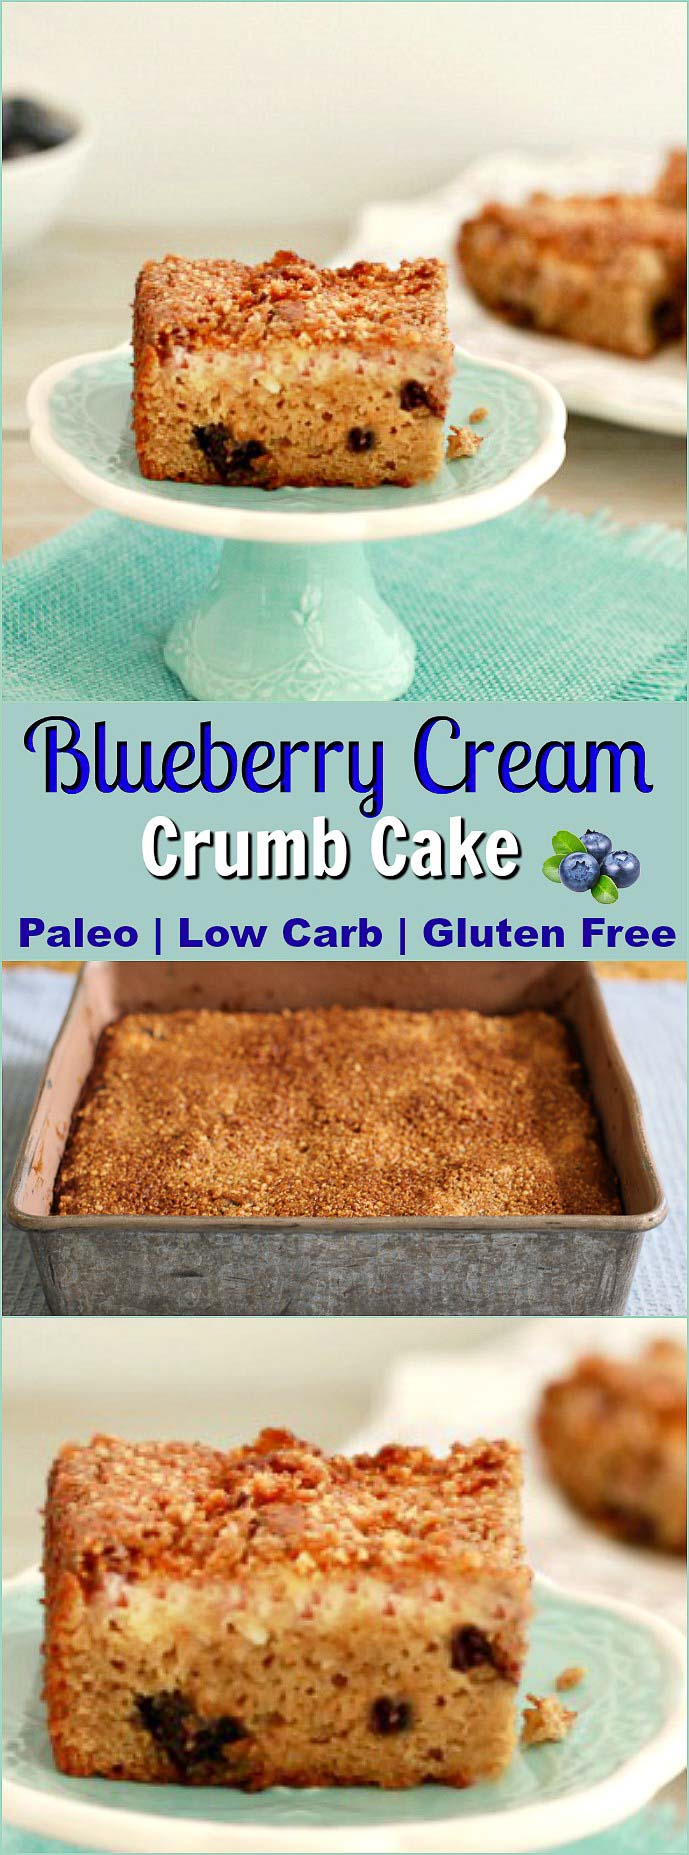 Blueberry Cream Crumb Cake- pin image